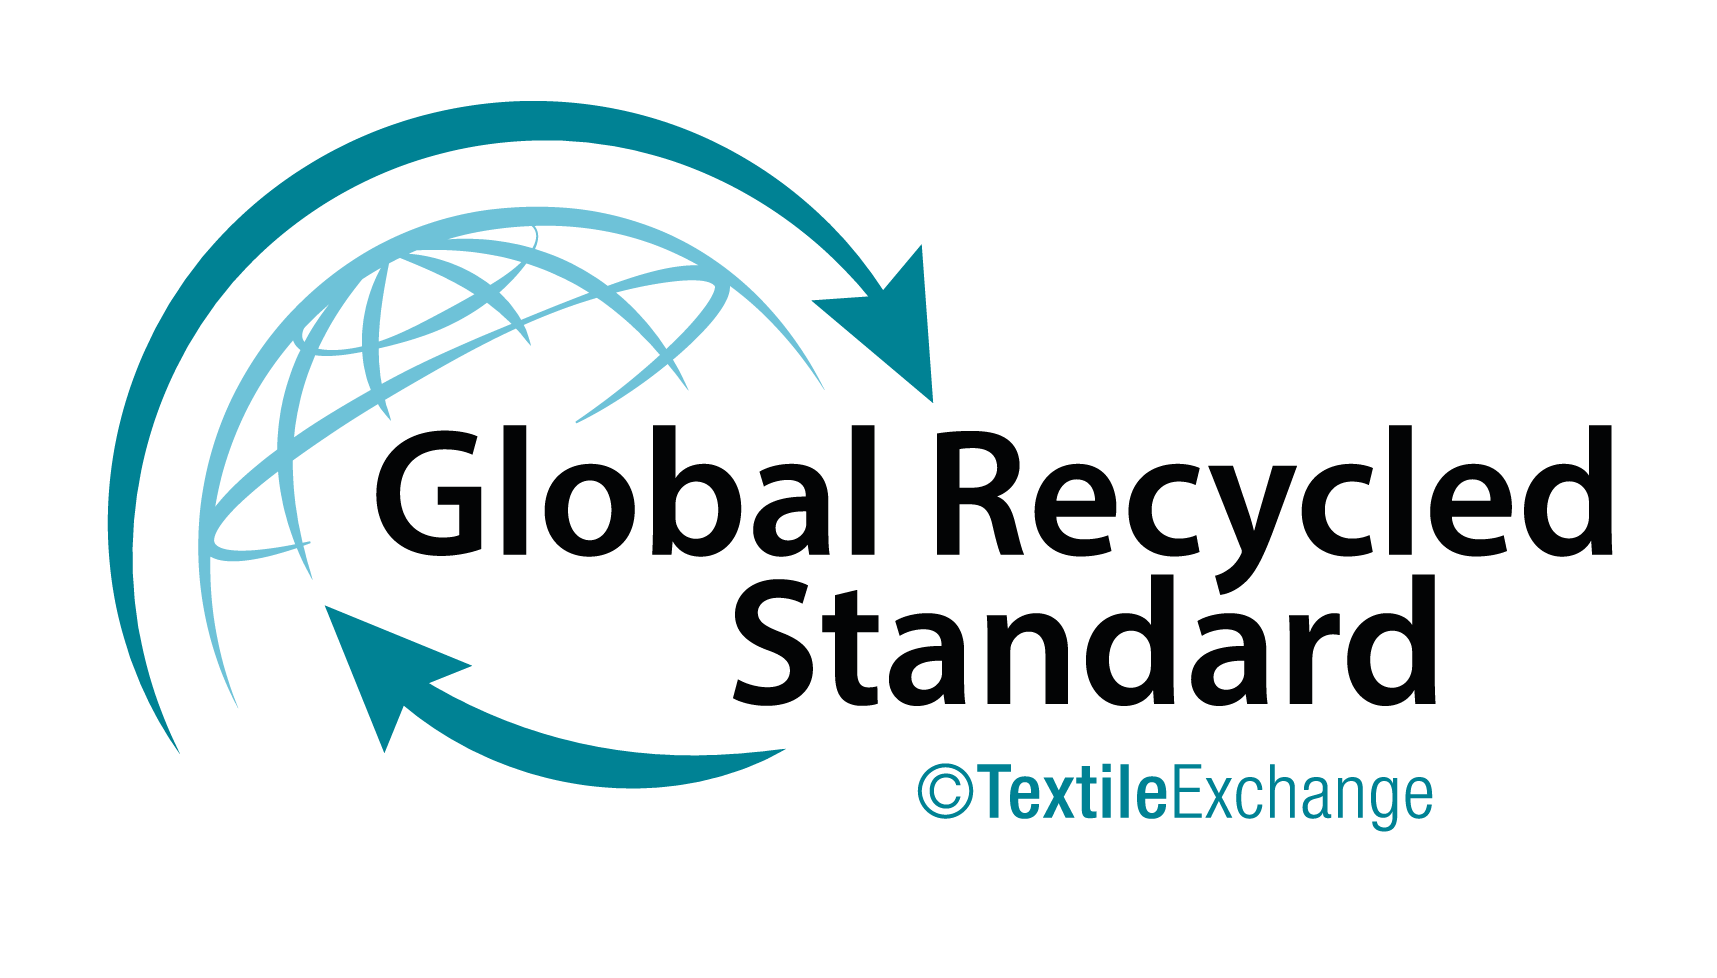  Global Recycled Standard logo